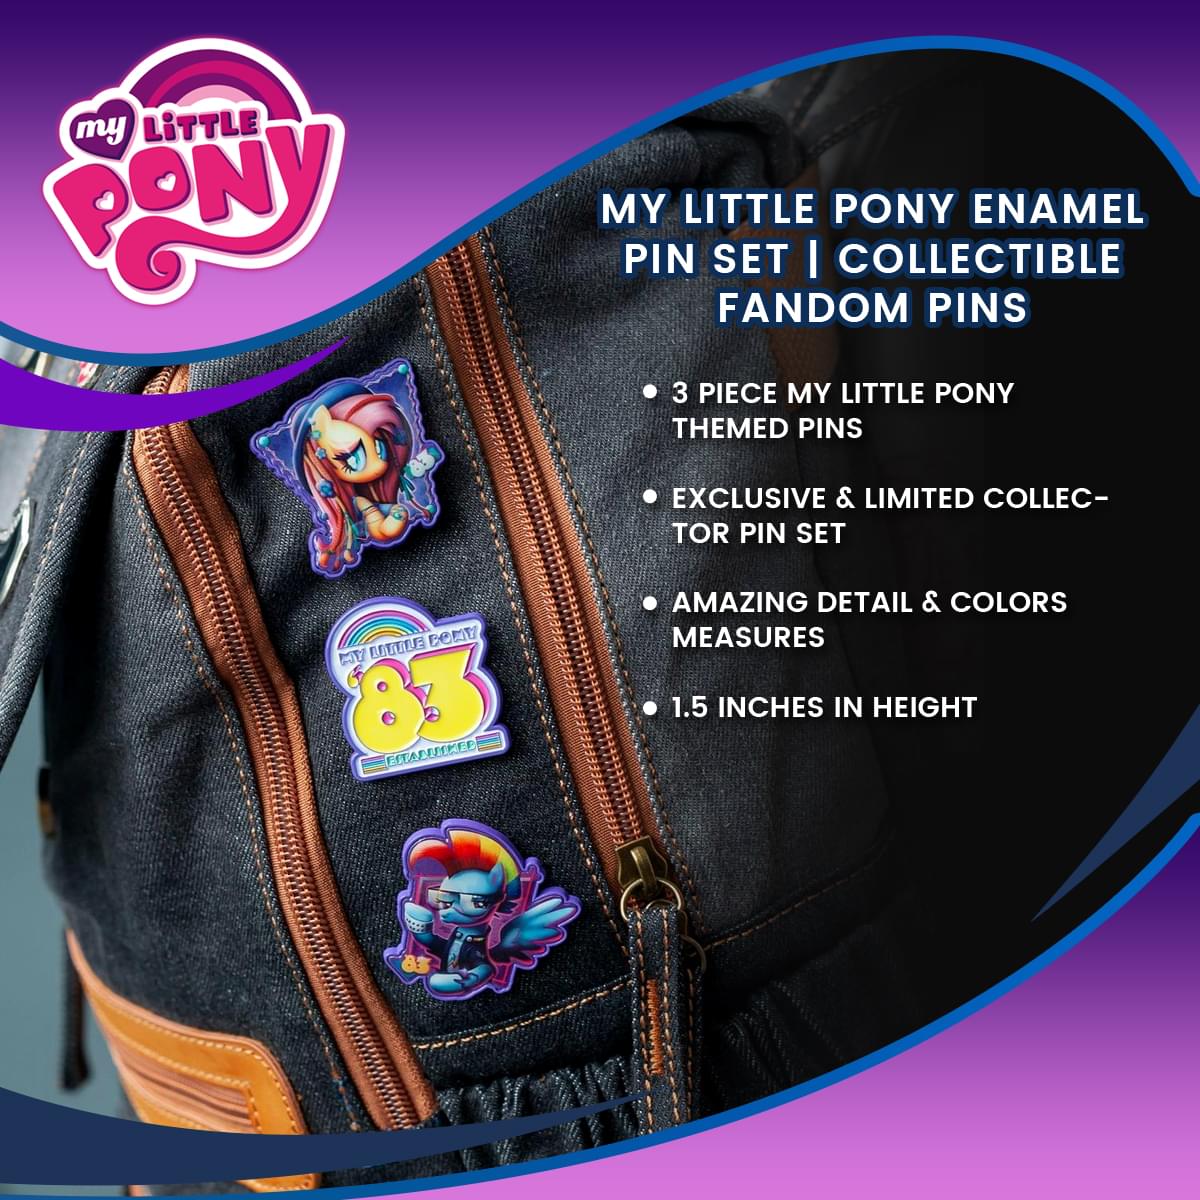 My Little Pony Enamel Pin Set | Collectible Fandom Pins